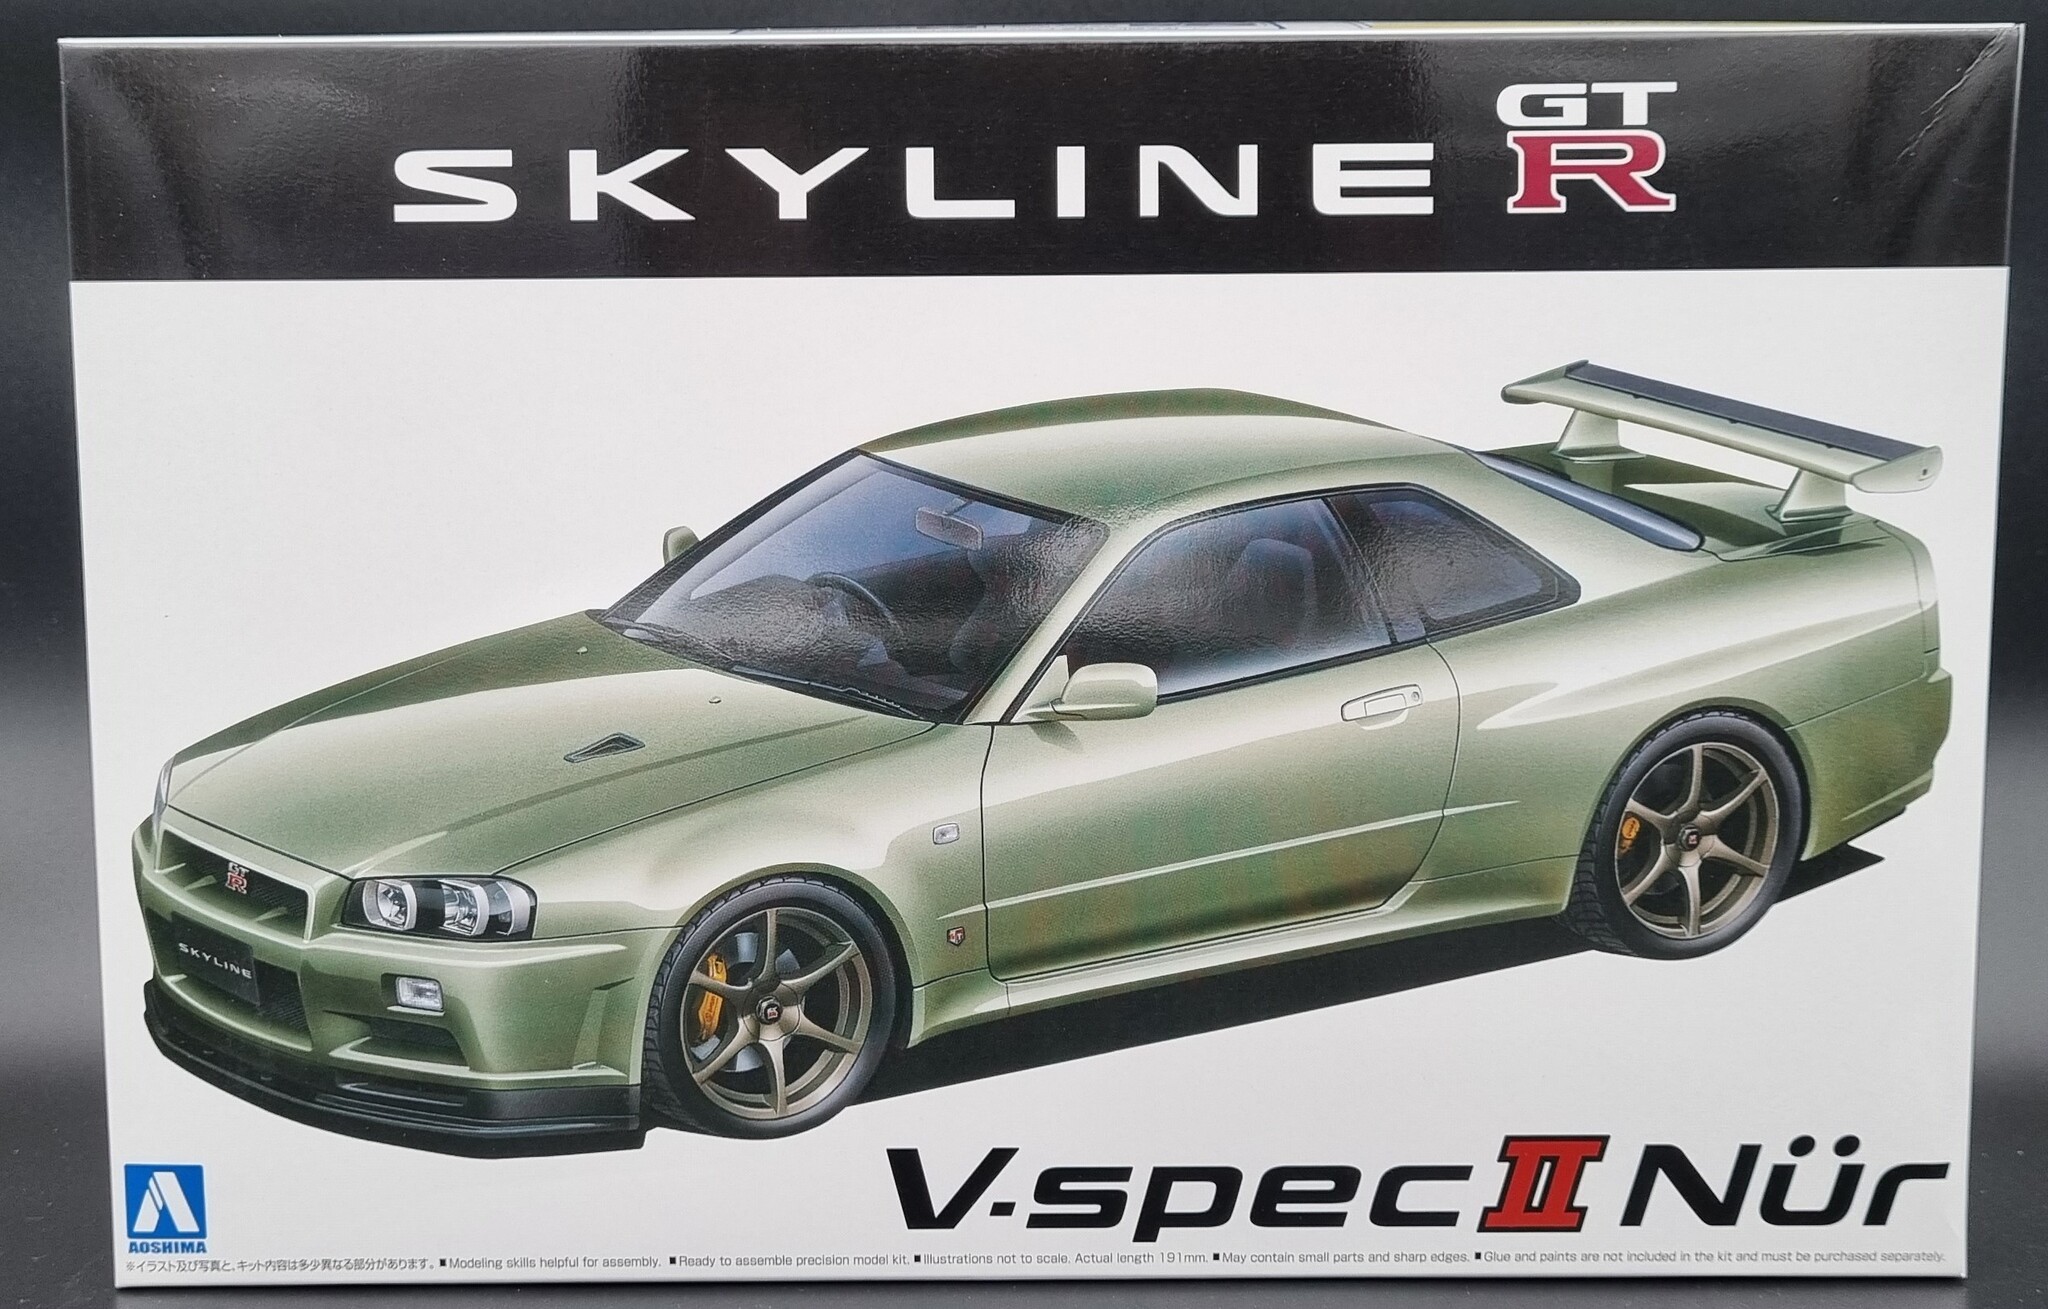 Nissan Skyline GT-R R34 V-SPEC II NUR '02